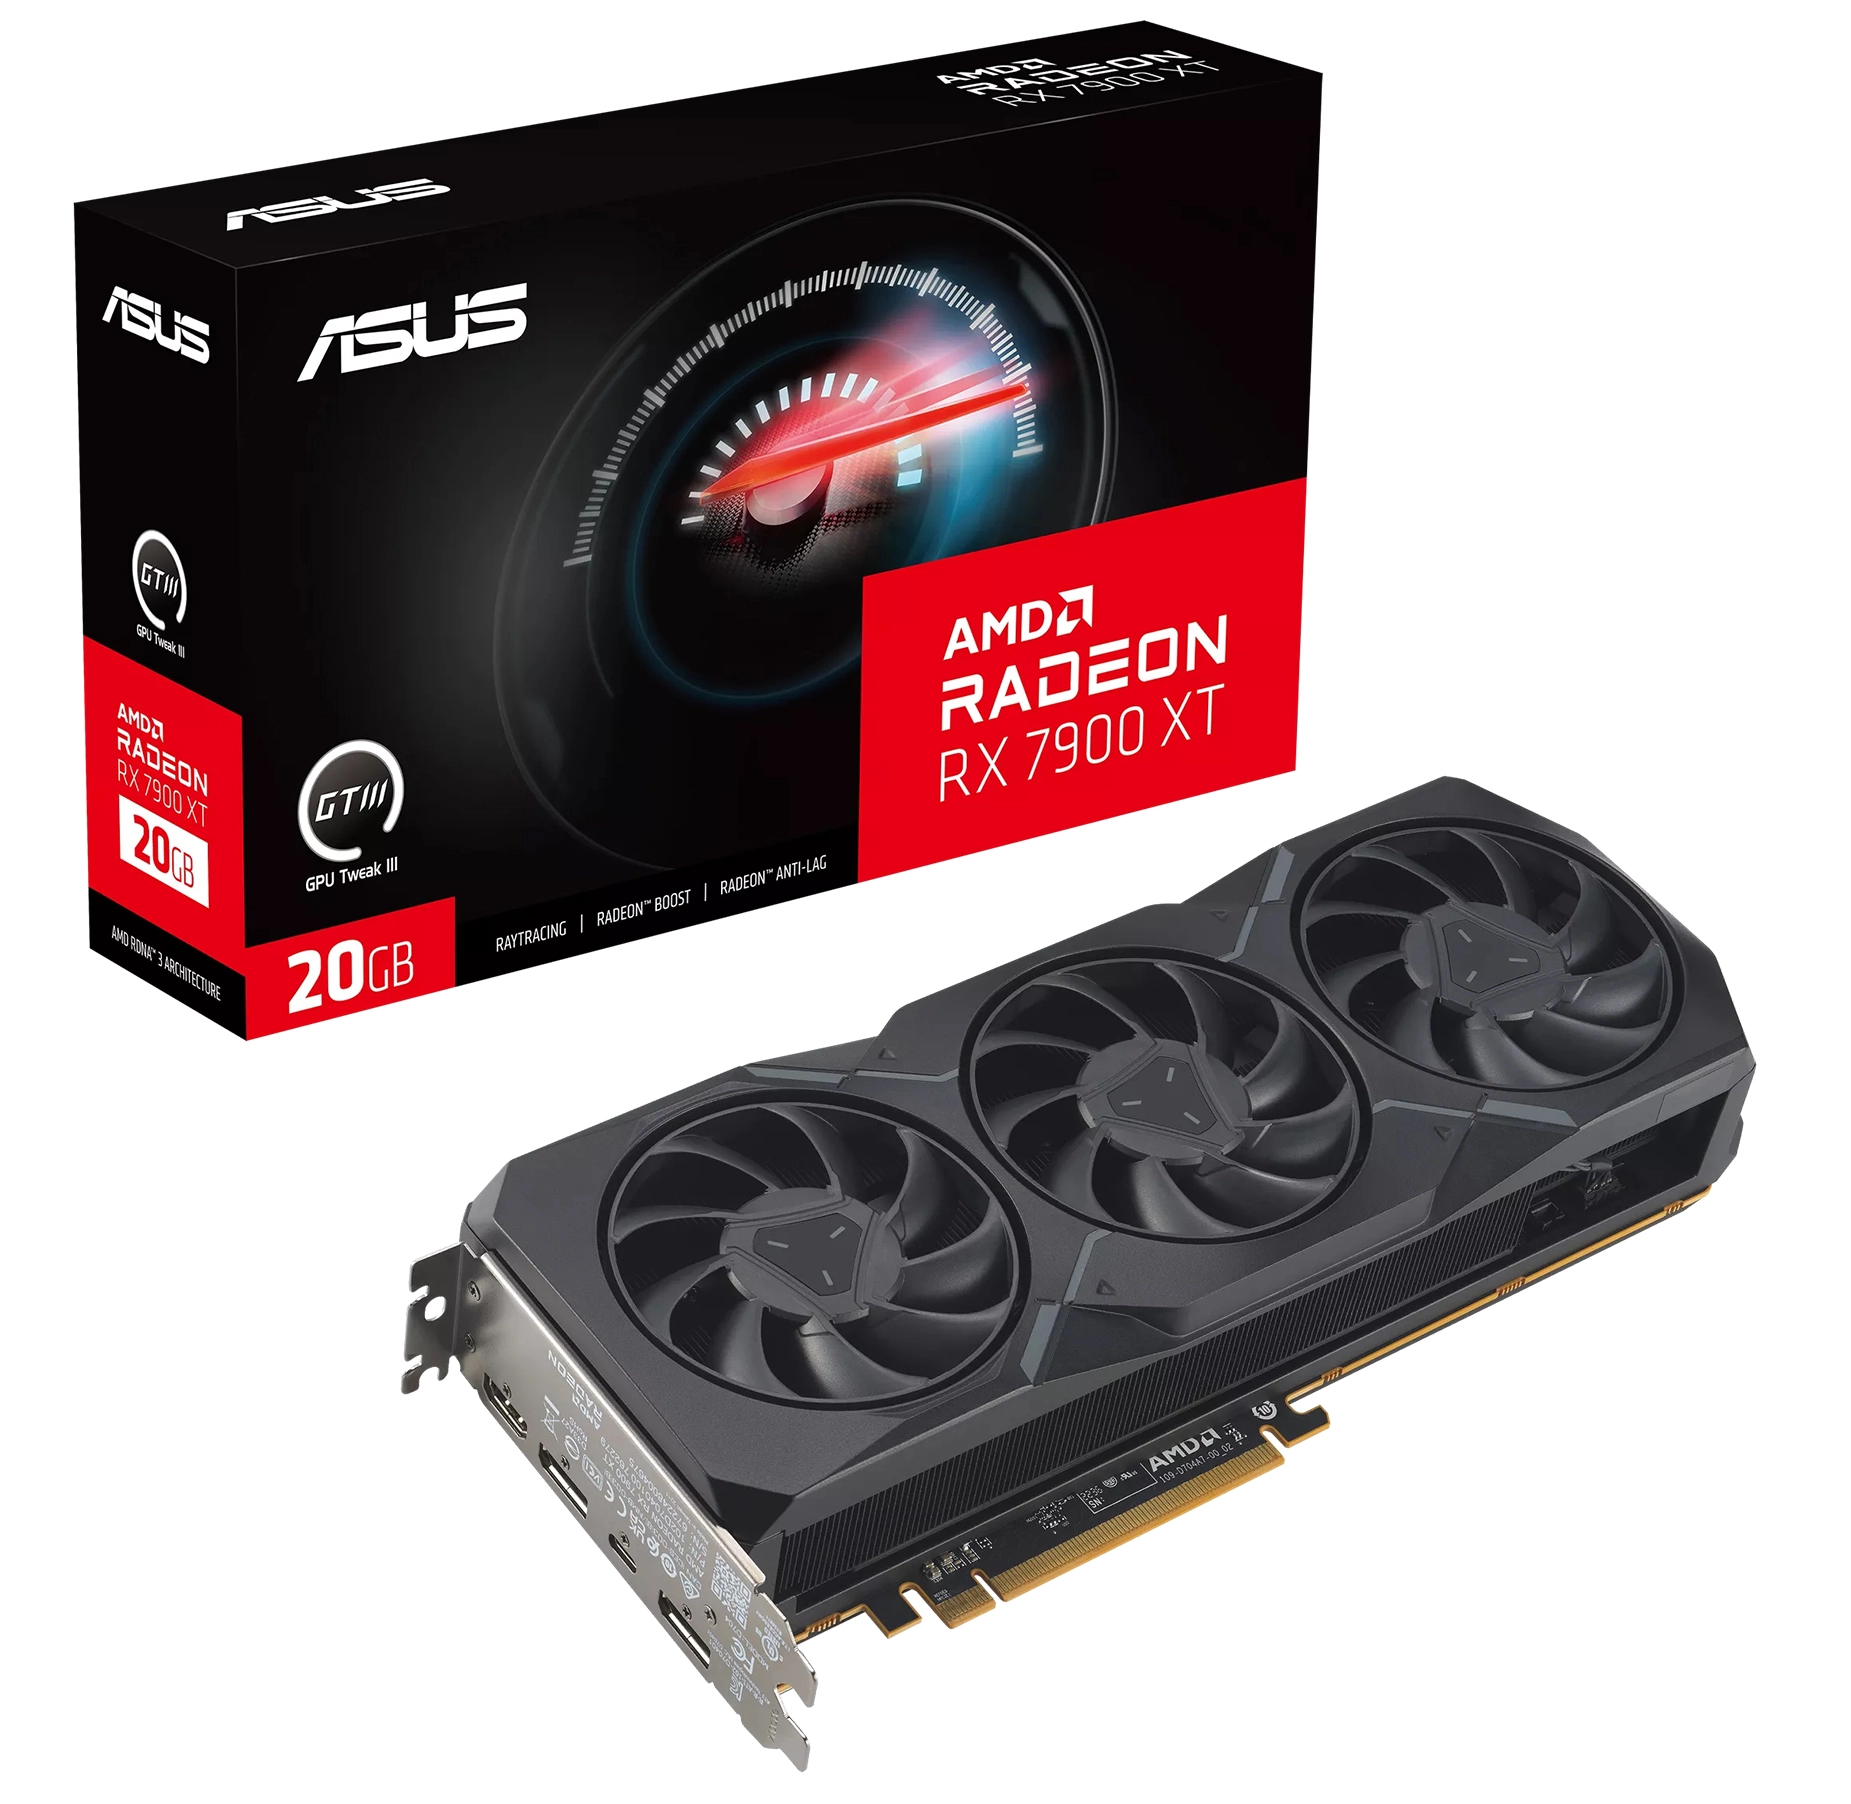 ASUS Radeon RX 7900 XT 20GB GDDR6 Package